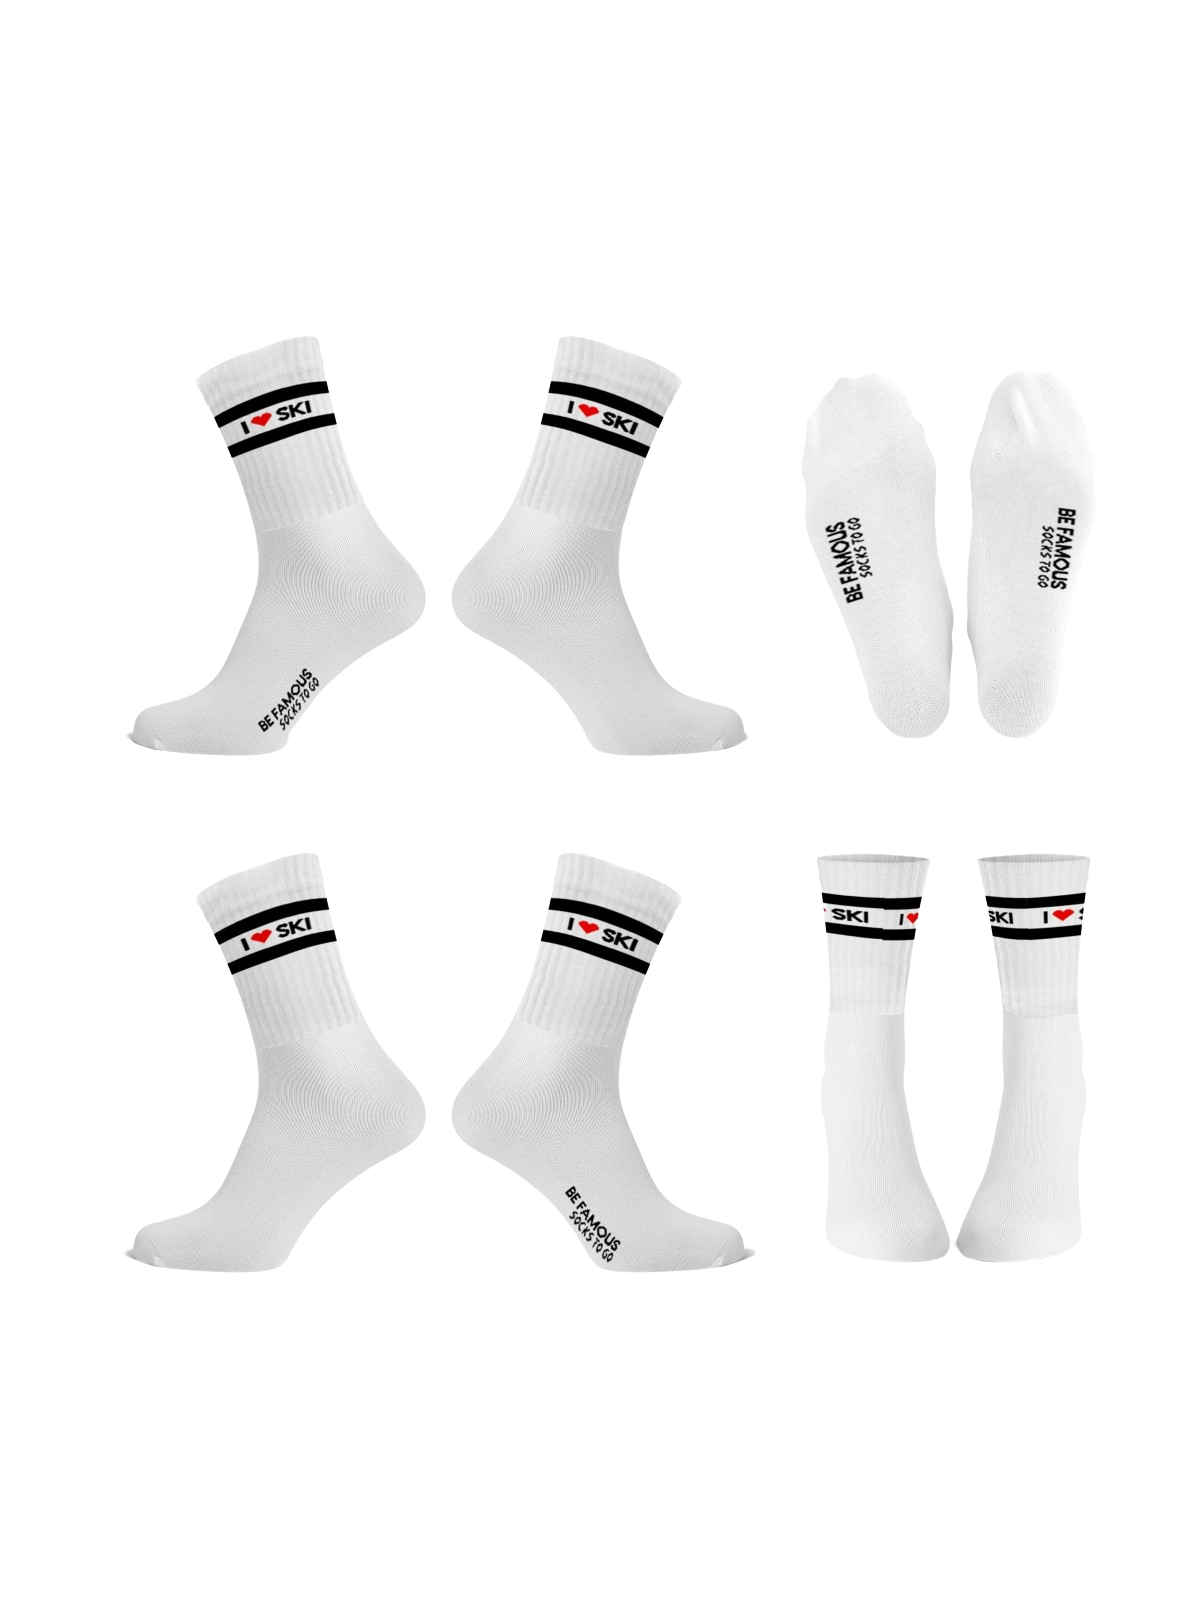 Be Famous  Socks to go  Statement  Socken  I ♥ SKI BFSO-34 white socks / black stripe / black-red ♥ statement 36-41